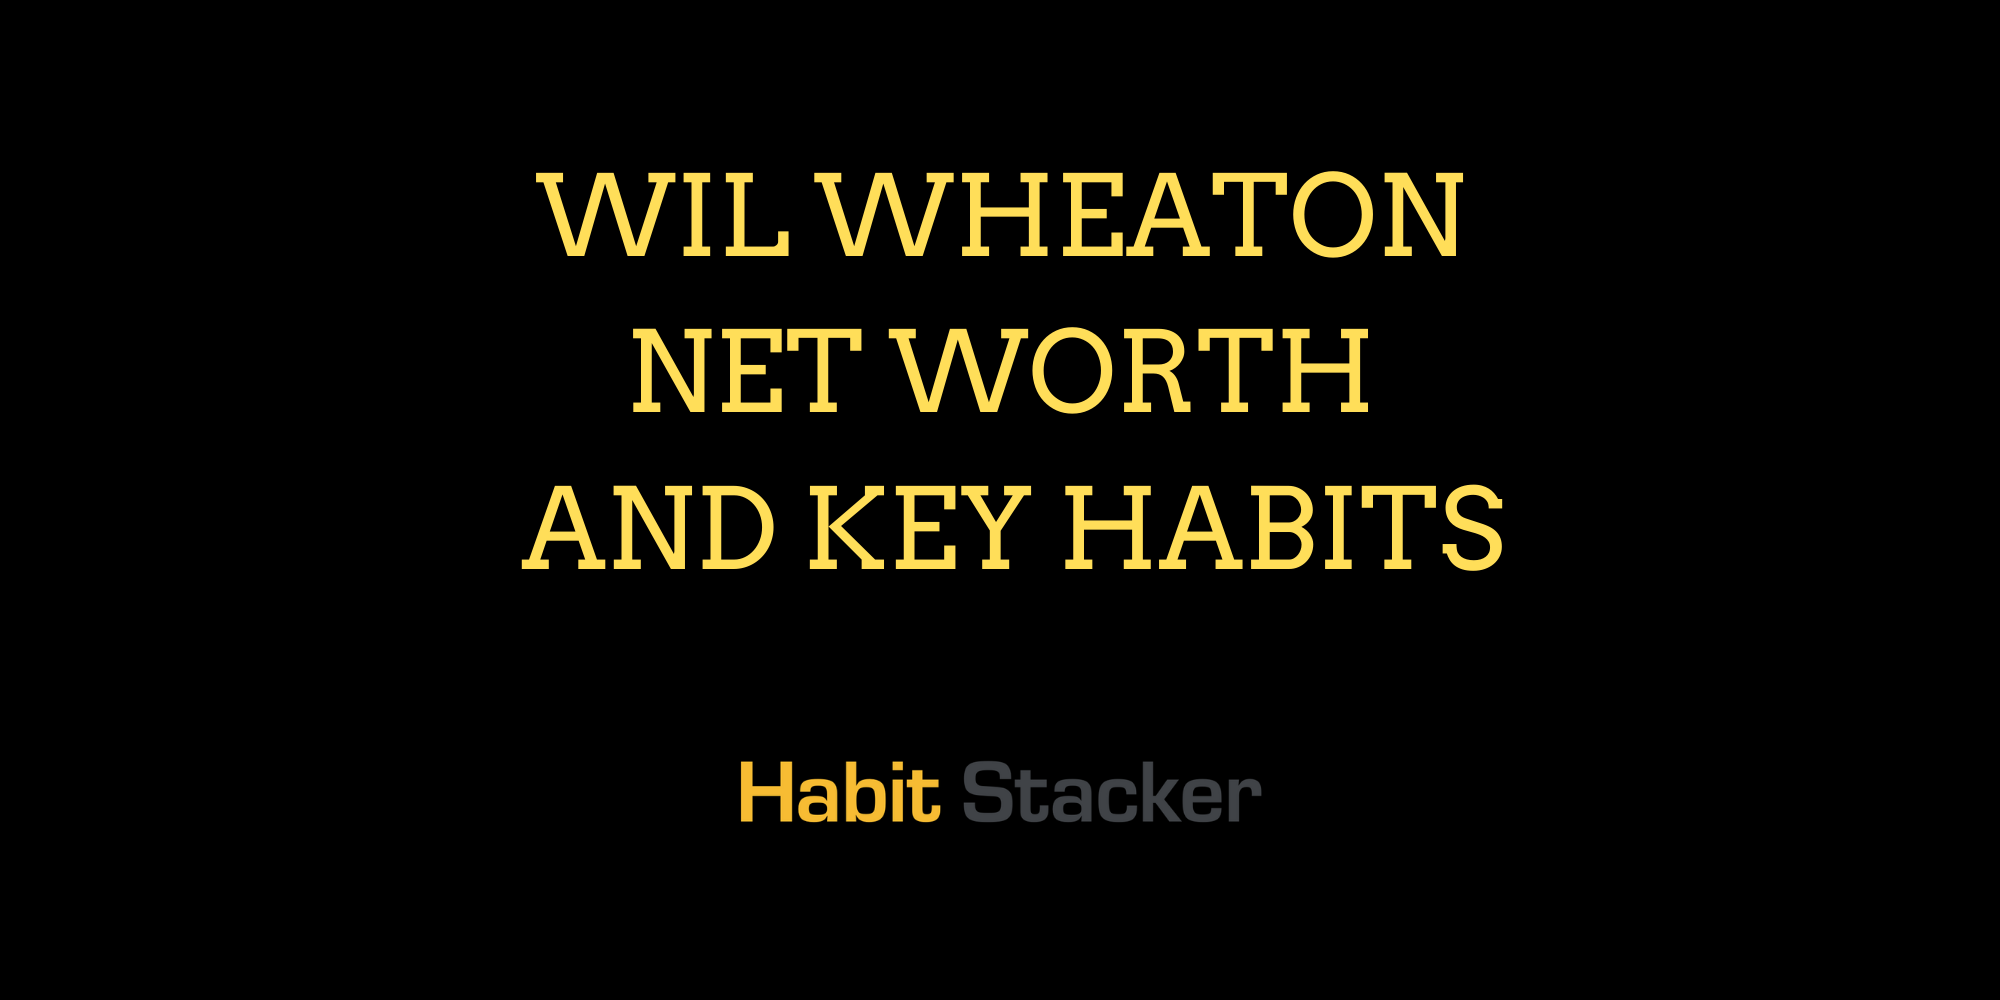 Wil Wheaton Net Worth and Key Habits